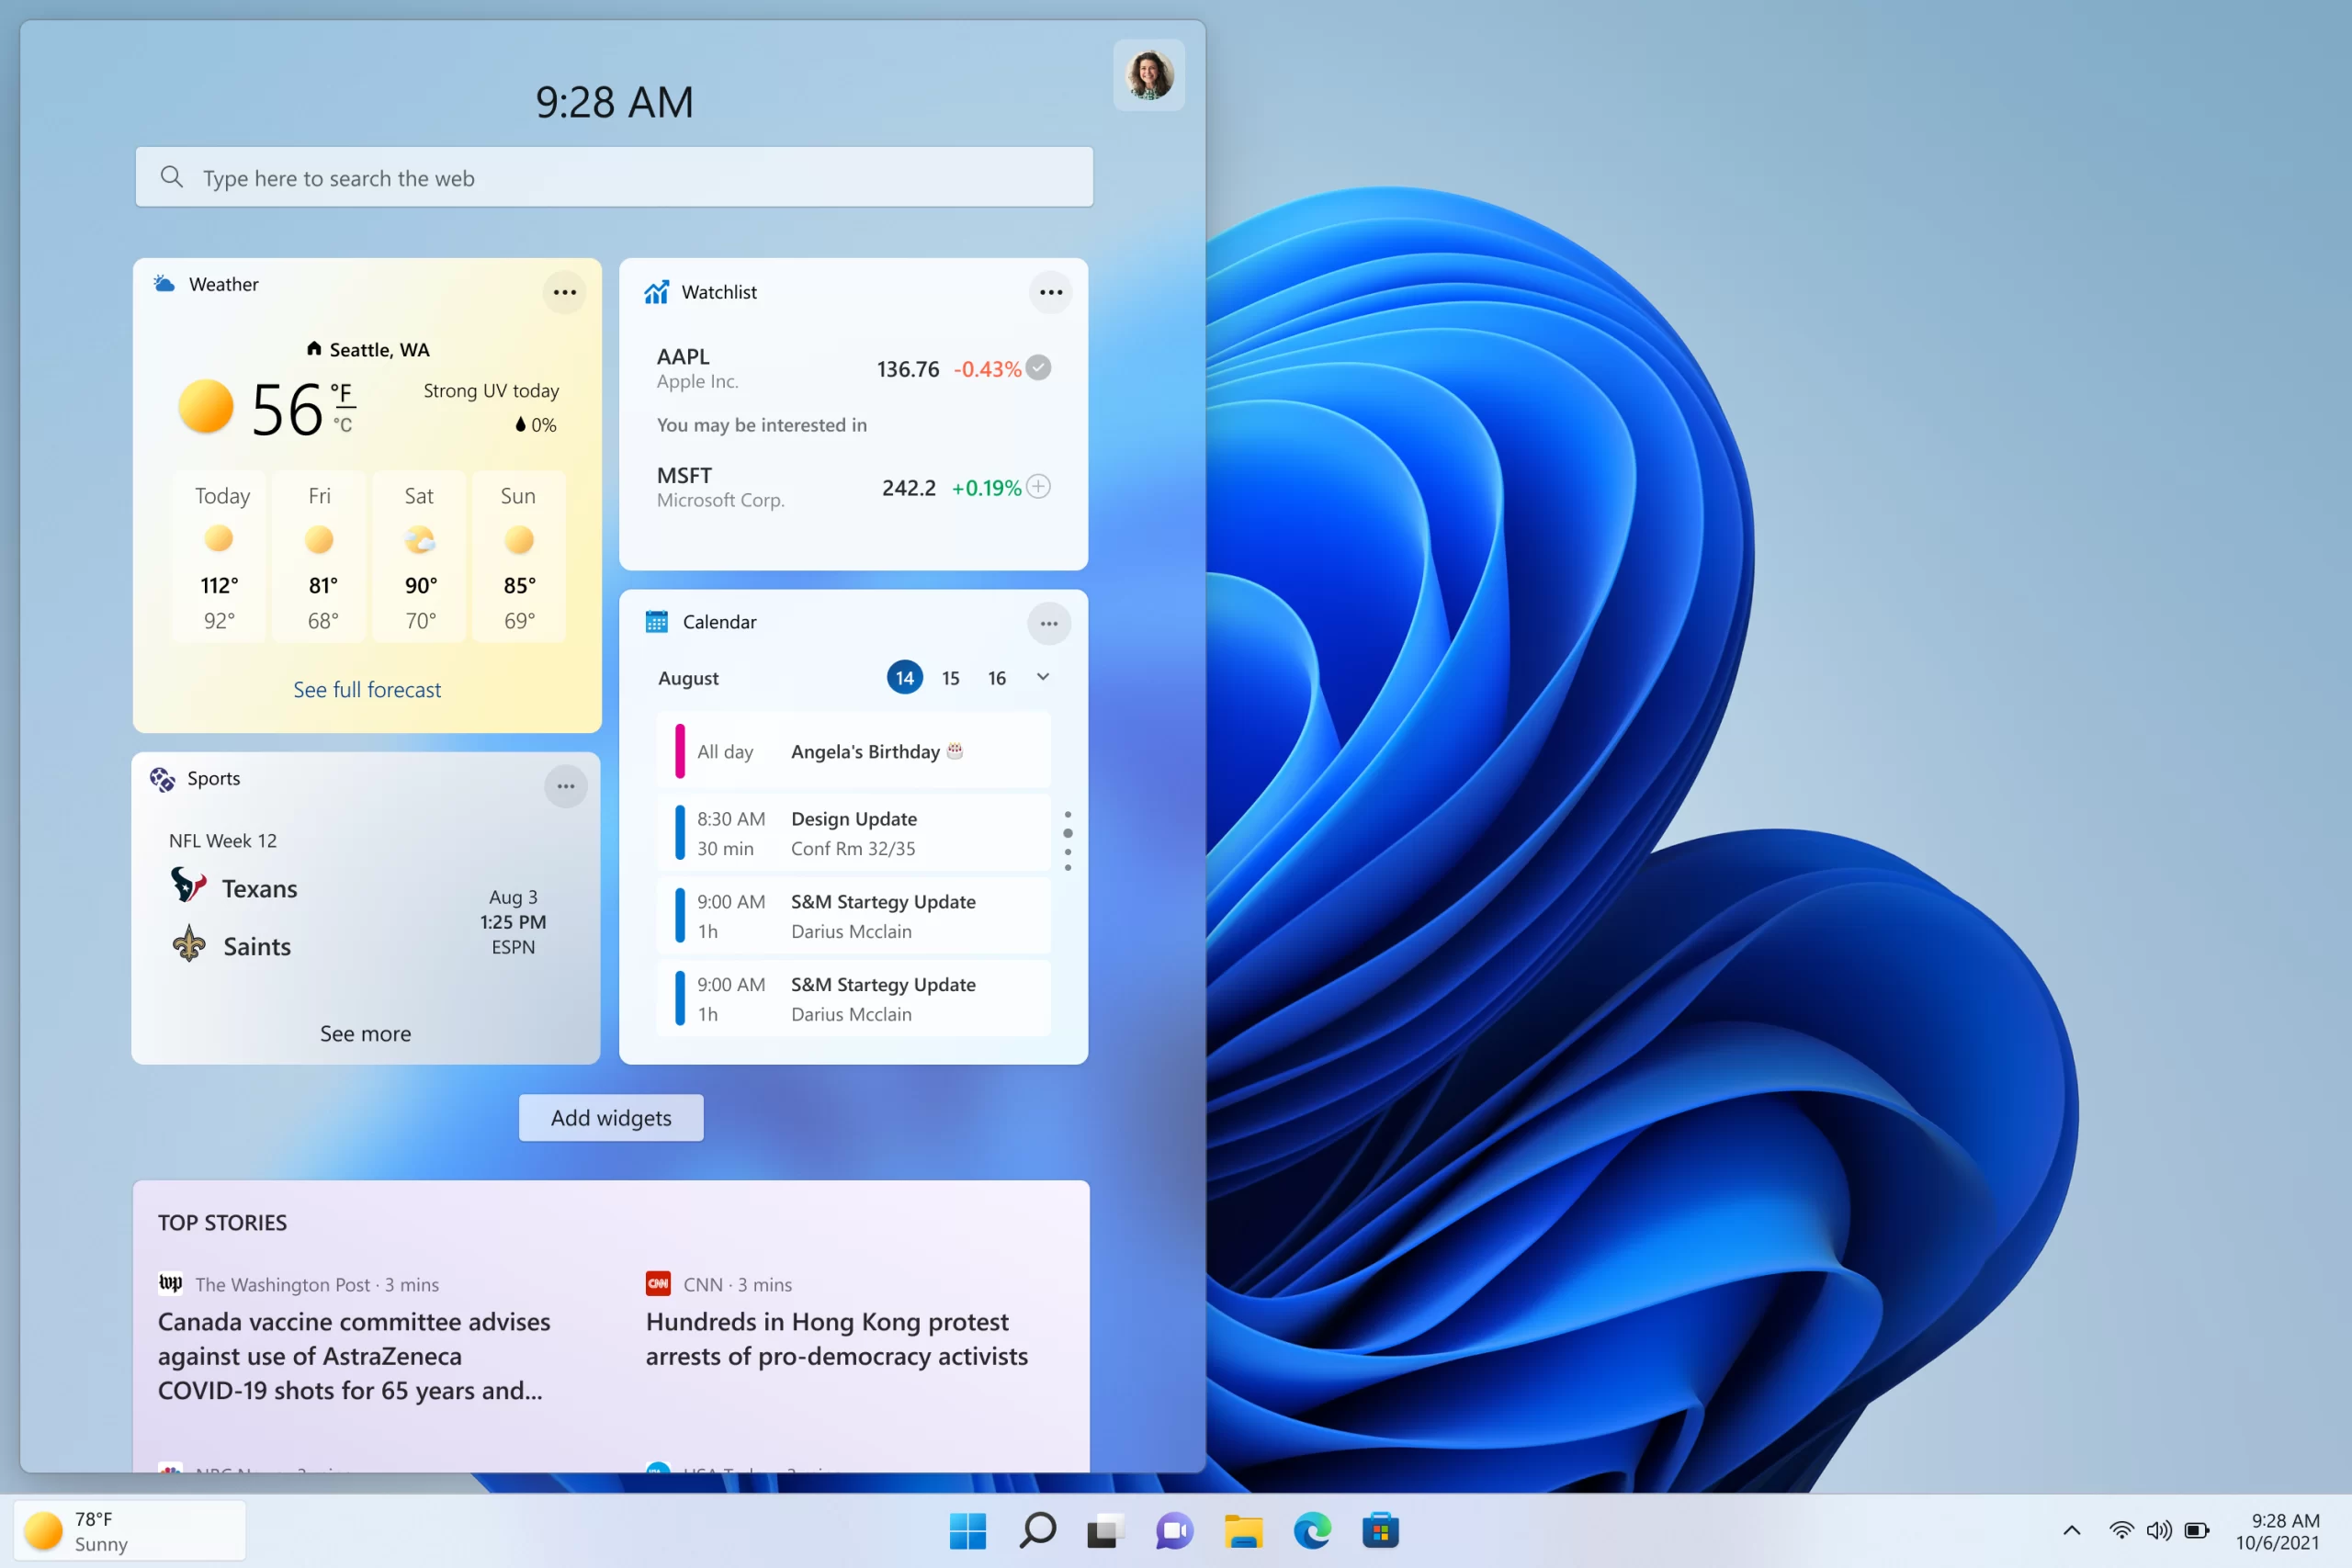 Widgets en Windows 11